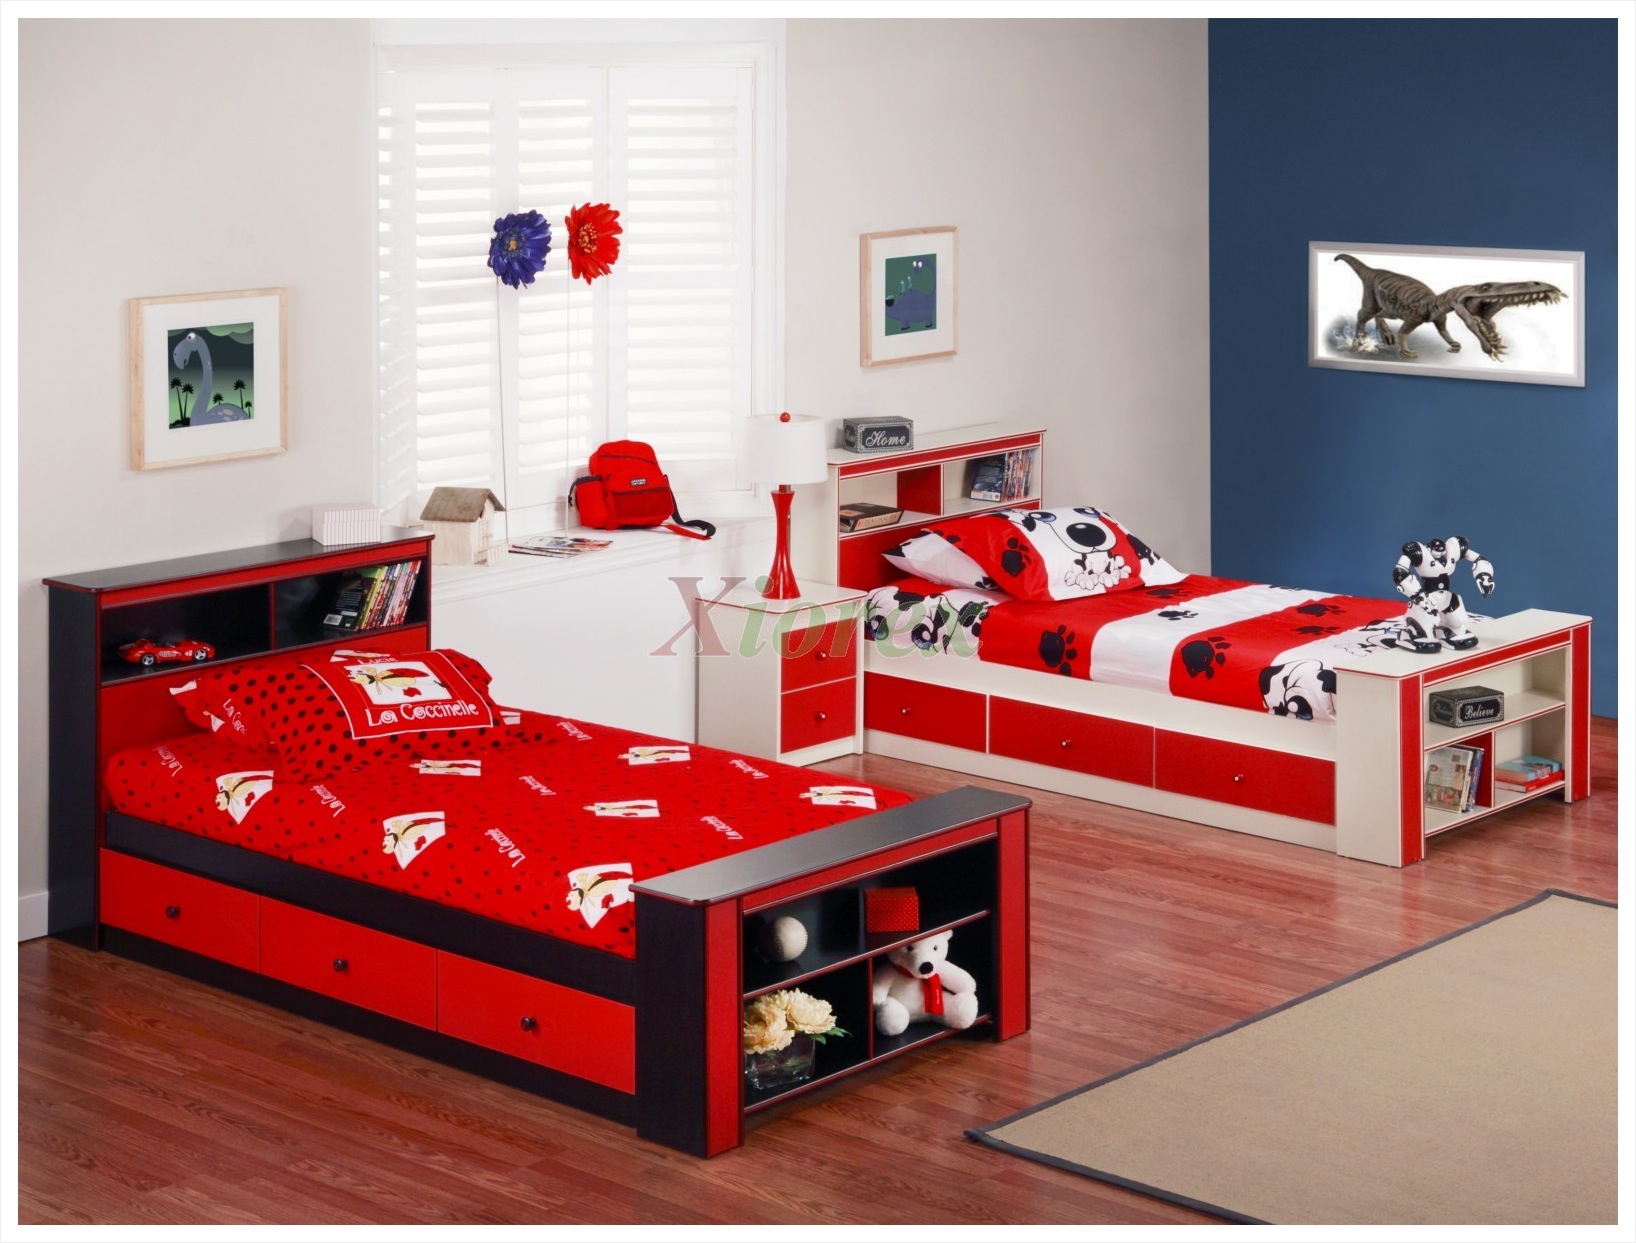 Rooms to go bedroom furniture for kids | Hawk Haven